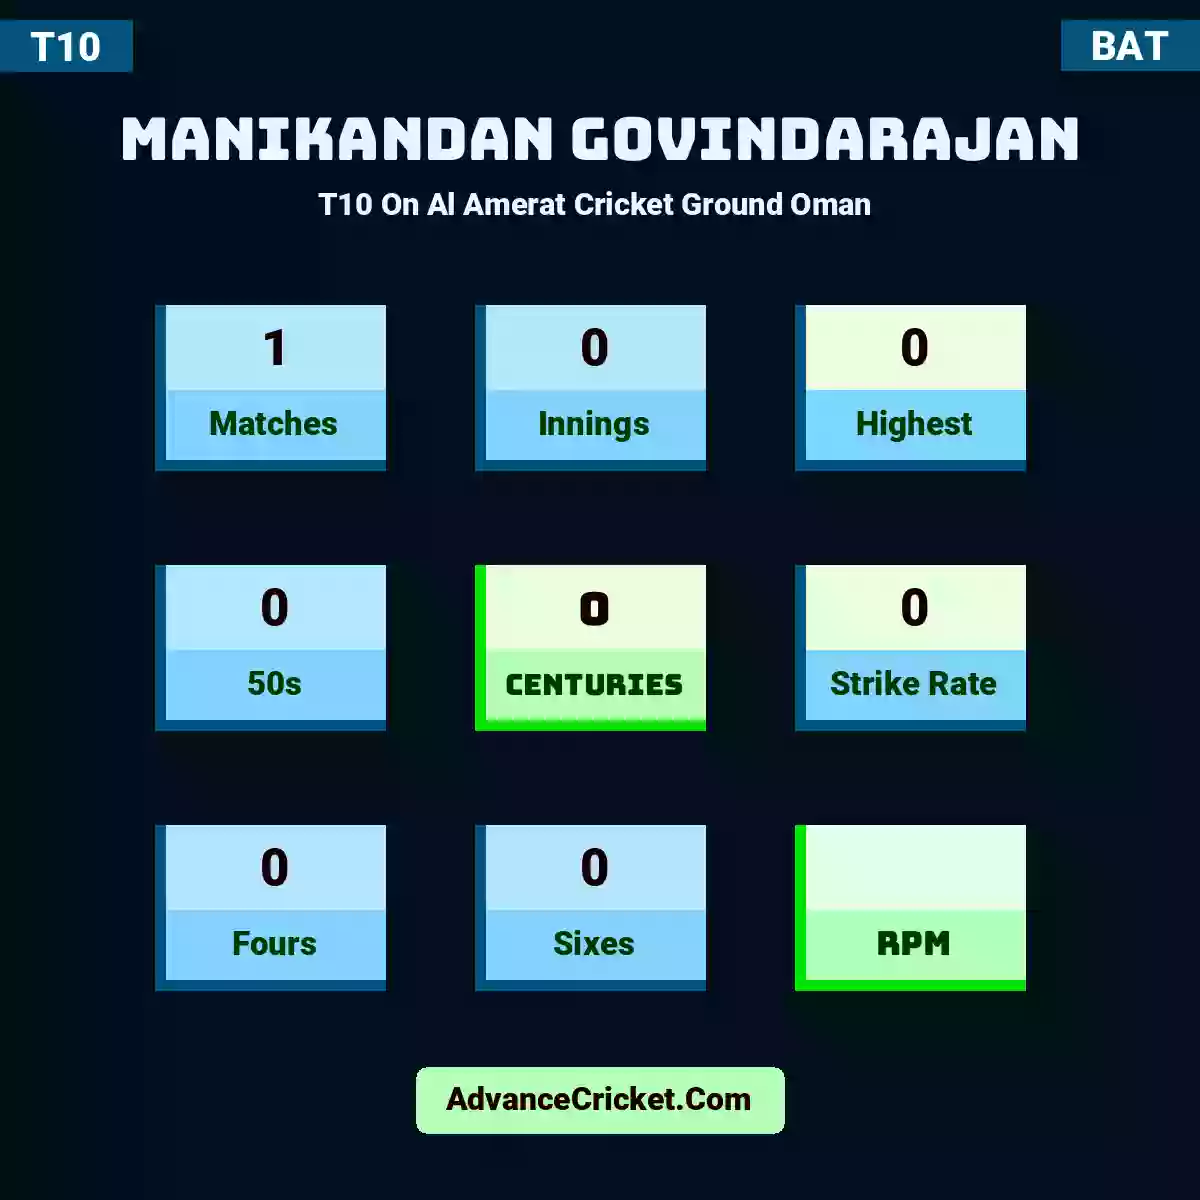 Manikandan Govindarajan T10  On Al Amerat Cricket Ground Oman , Manikandan Govindarajan played 1 matches, scored 0 runs as highest, 0 half-centuries, and 0 centuries, with a strike rate of 0. M.Govindarajan hit 0 fours and 0 sixes.